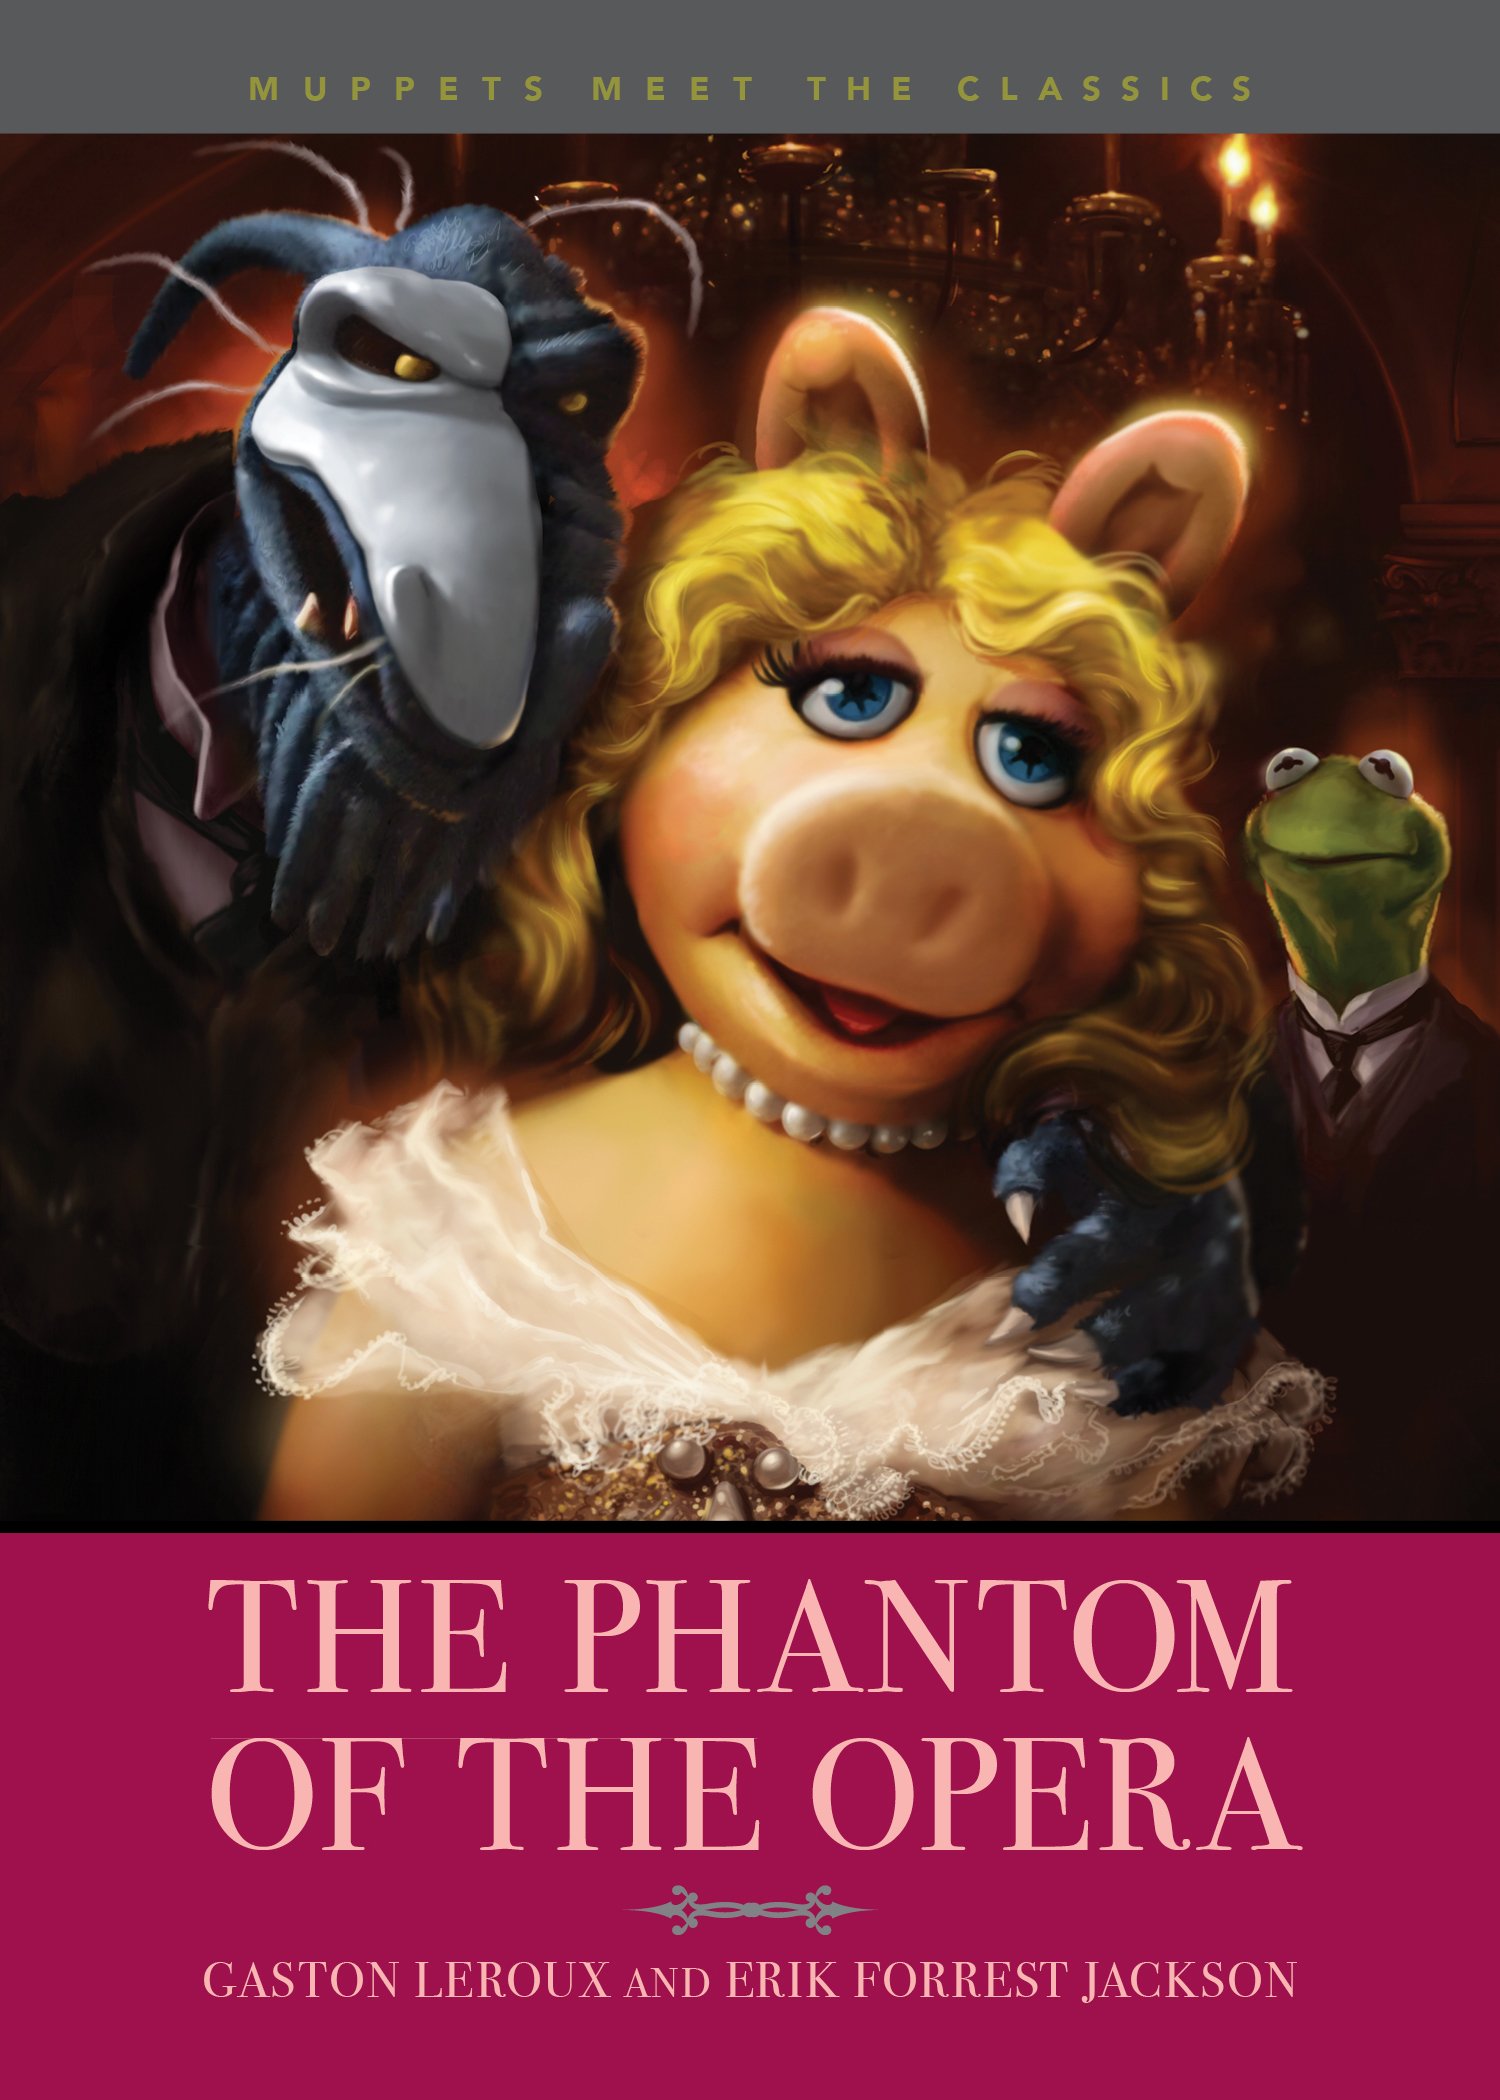 Meet the Phantom